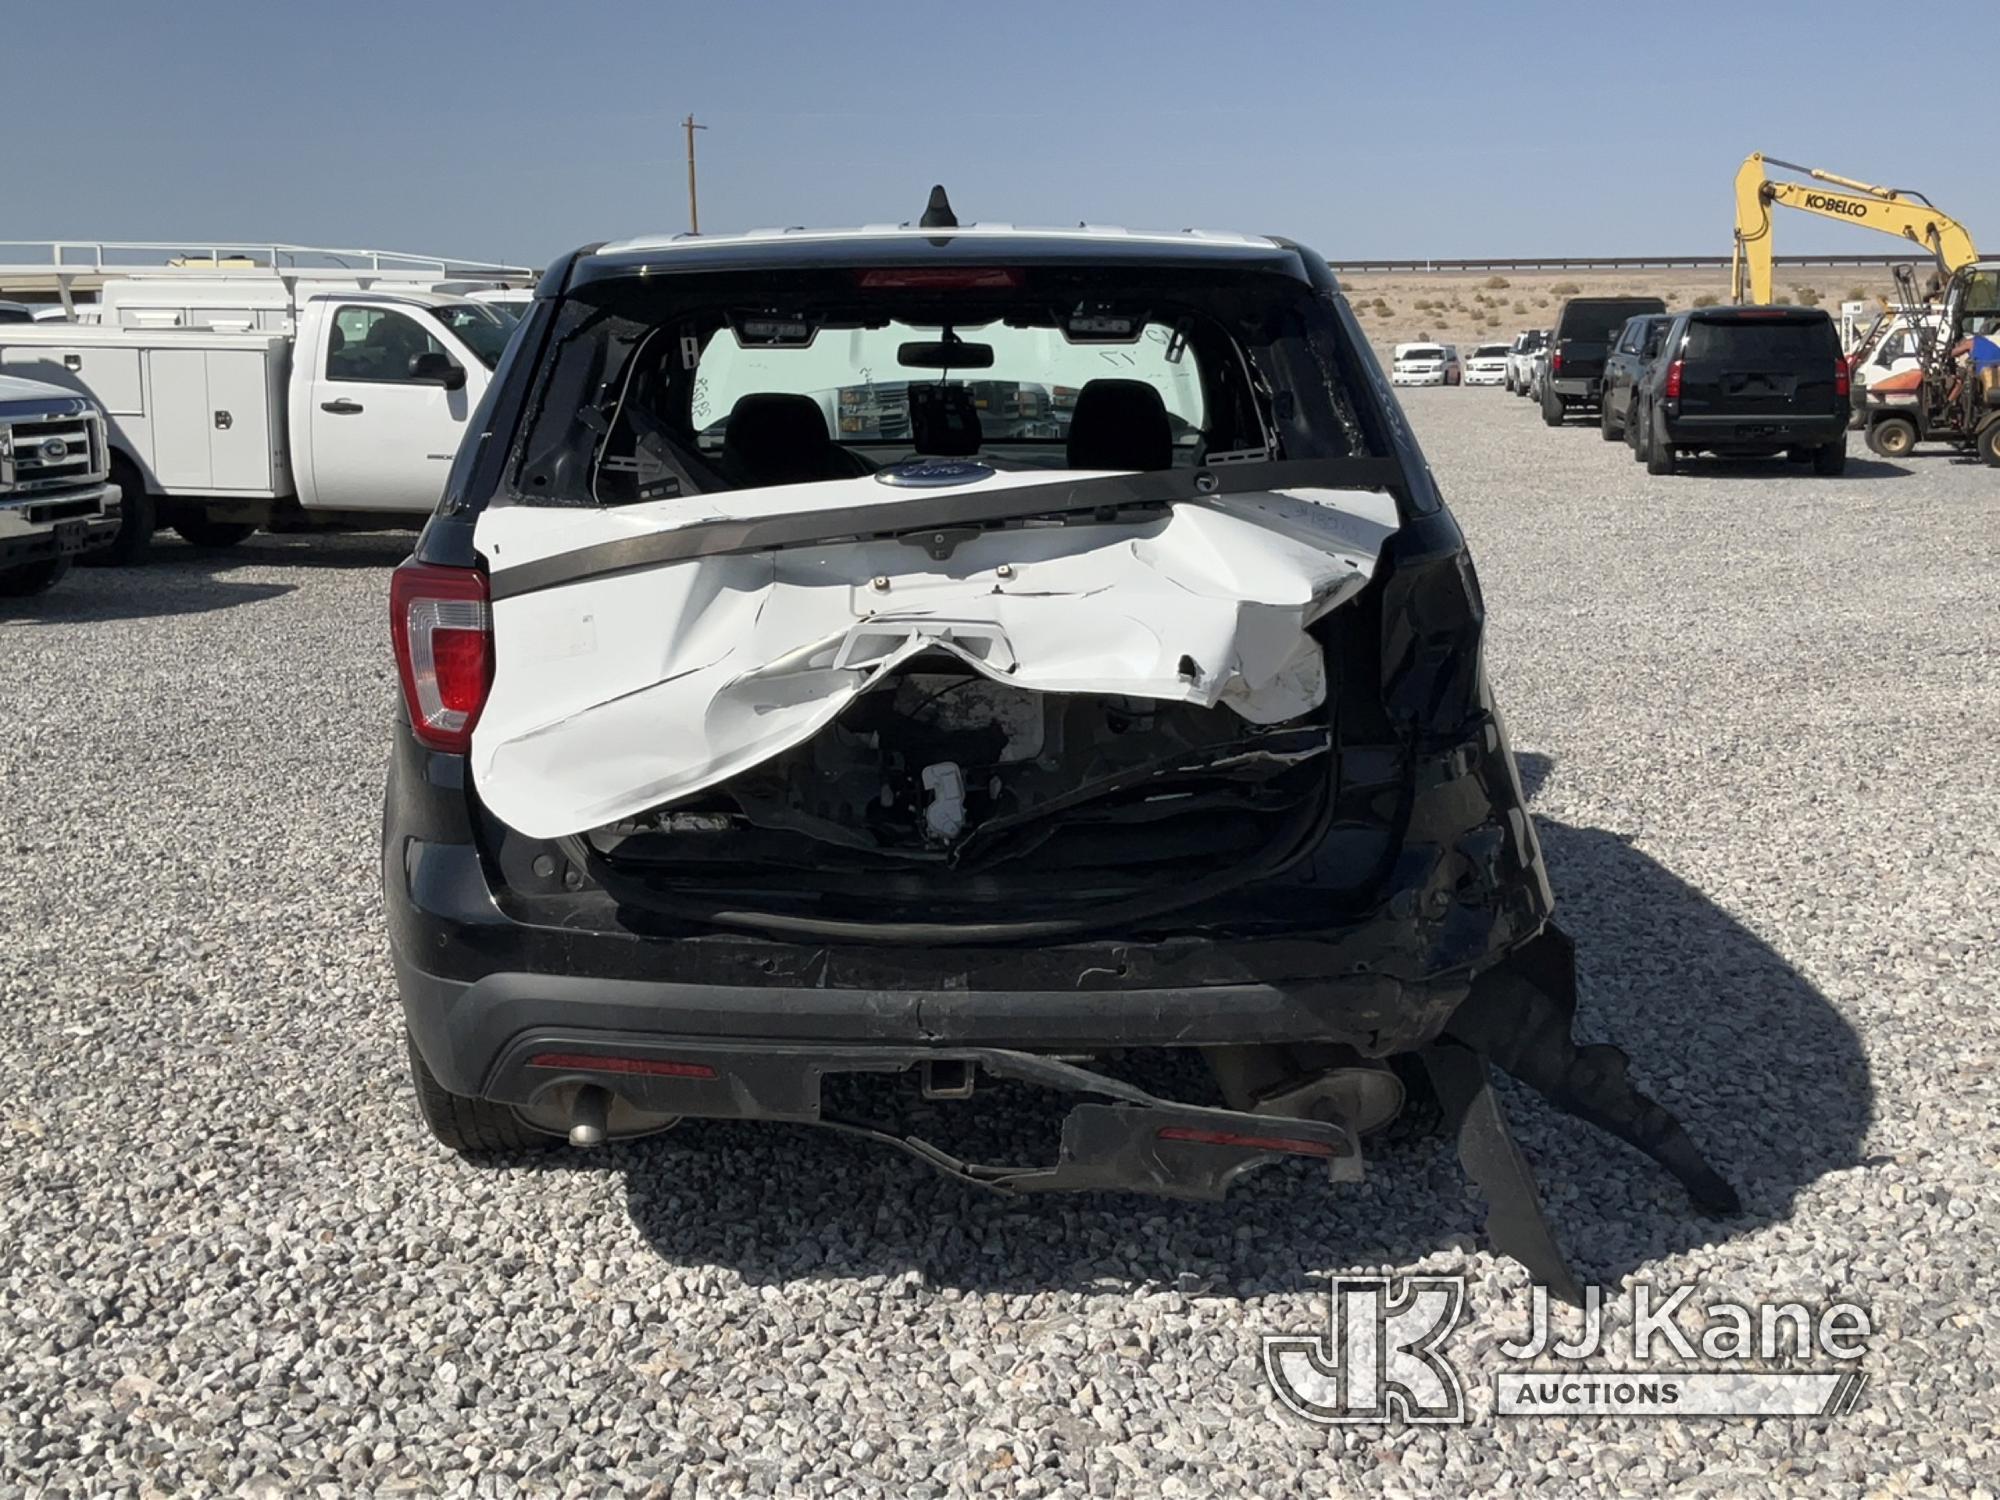 (Las Vegas, NV) 2017 Ford Explorer AWD Police Interceptor No Engine & Transmission, Missing Parts